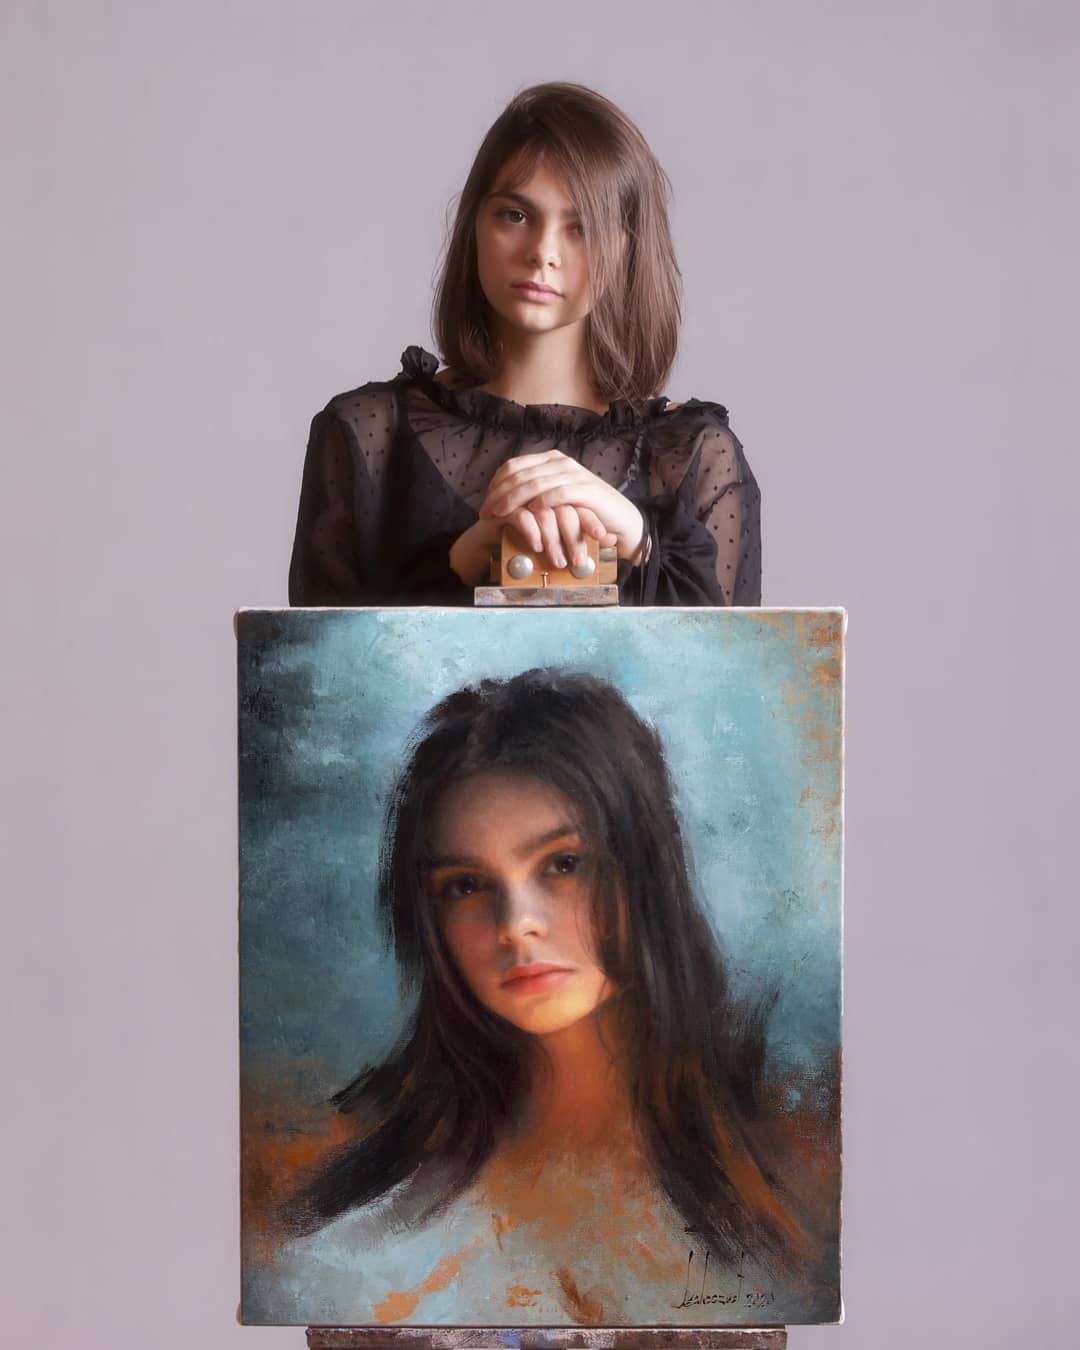 Realistic Portraits by Damian Lechoszest